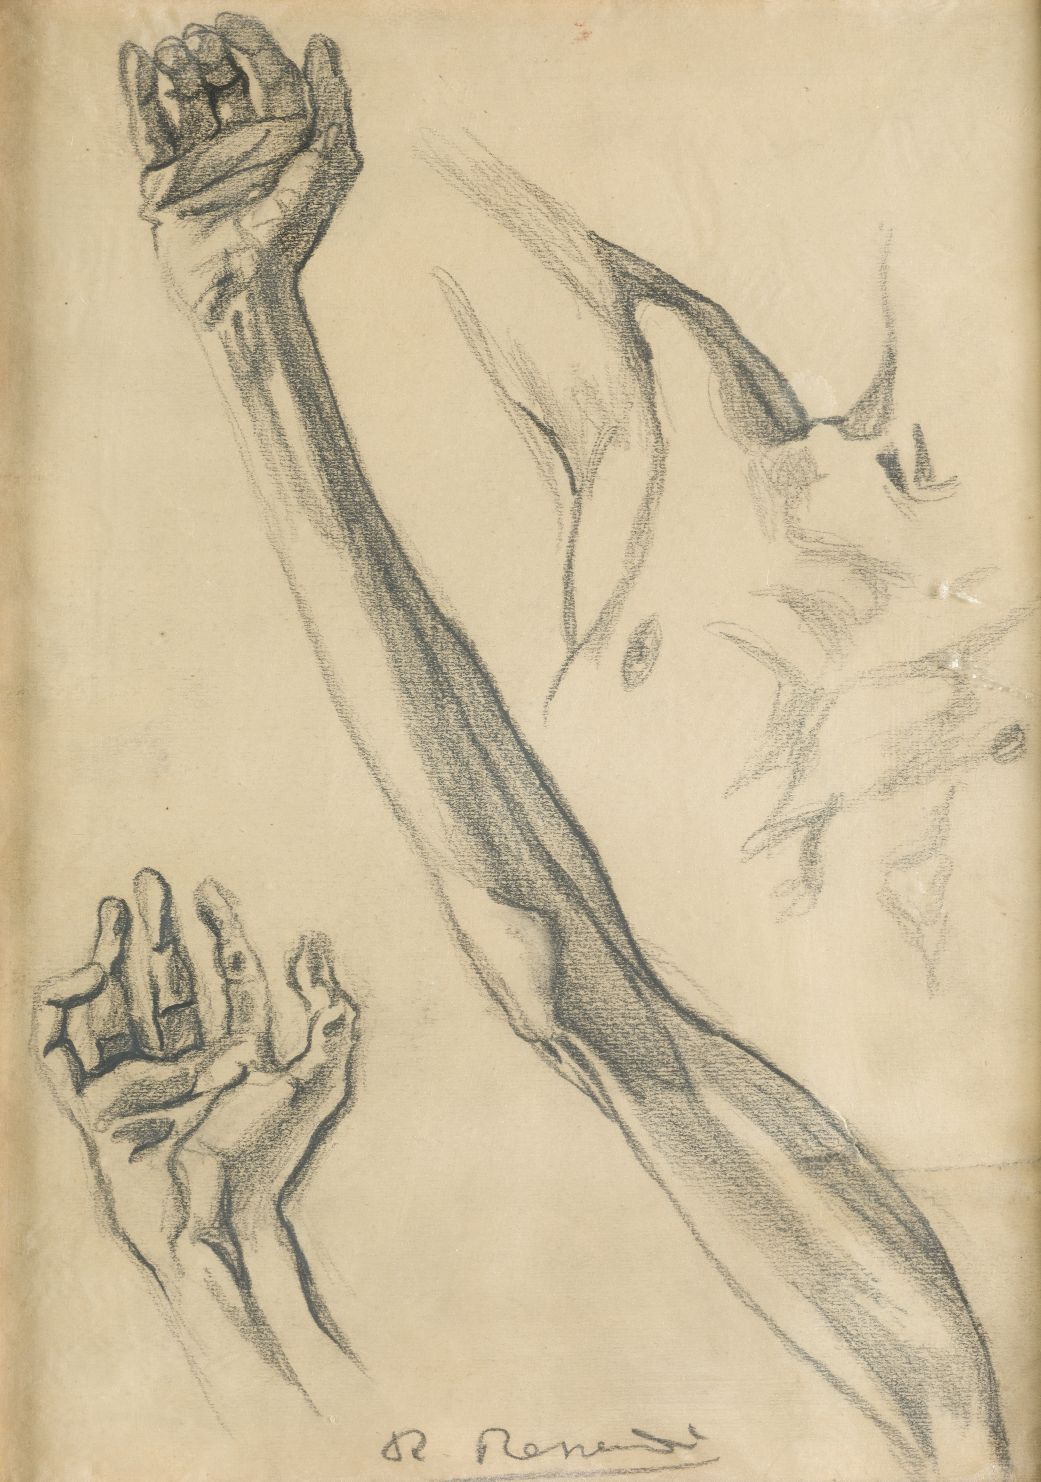 BALDOMERO ROMERO RESSENDI (1922 / 1977) "Sketches of the Crucifixion", 1961 Tutt&hellip;